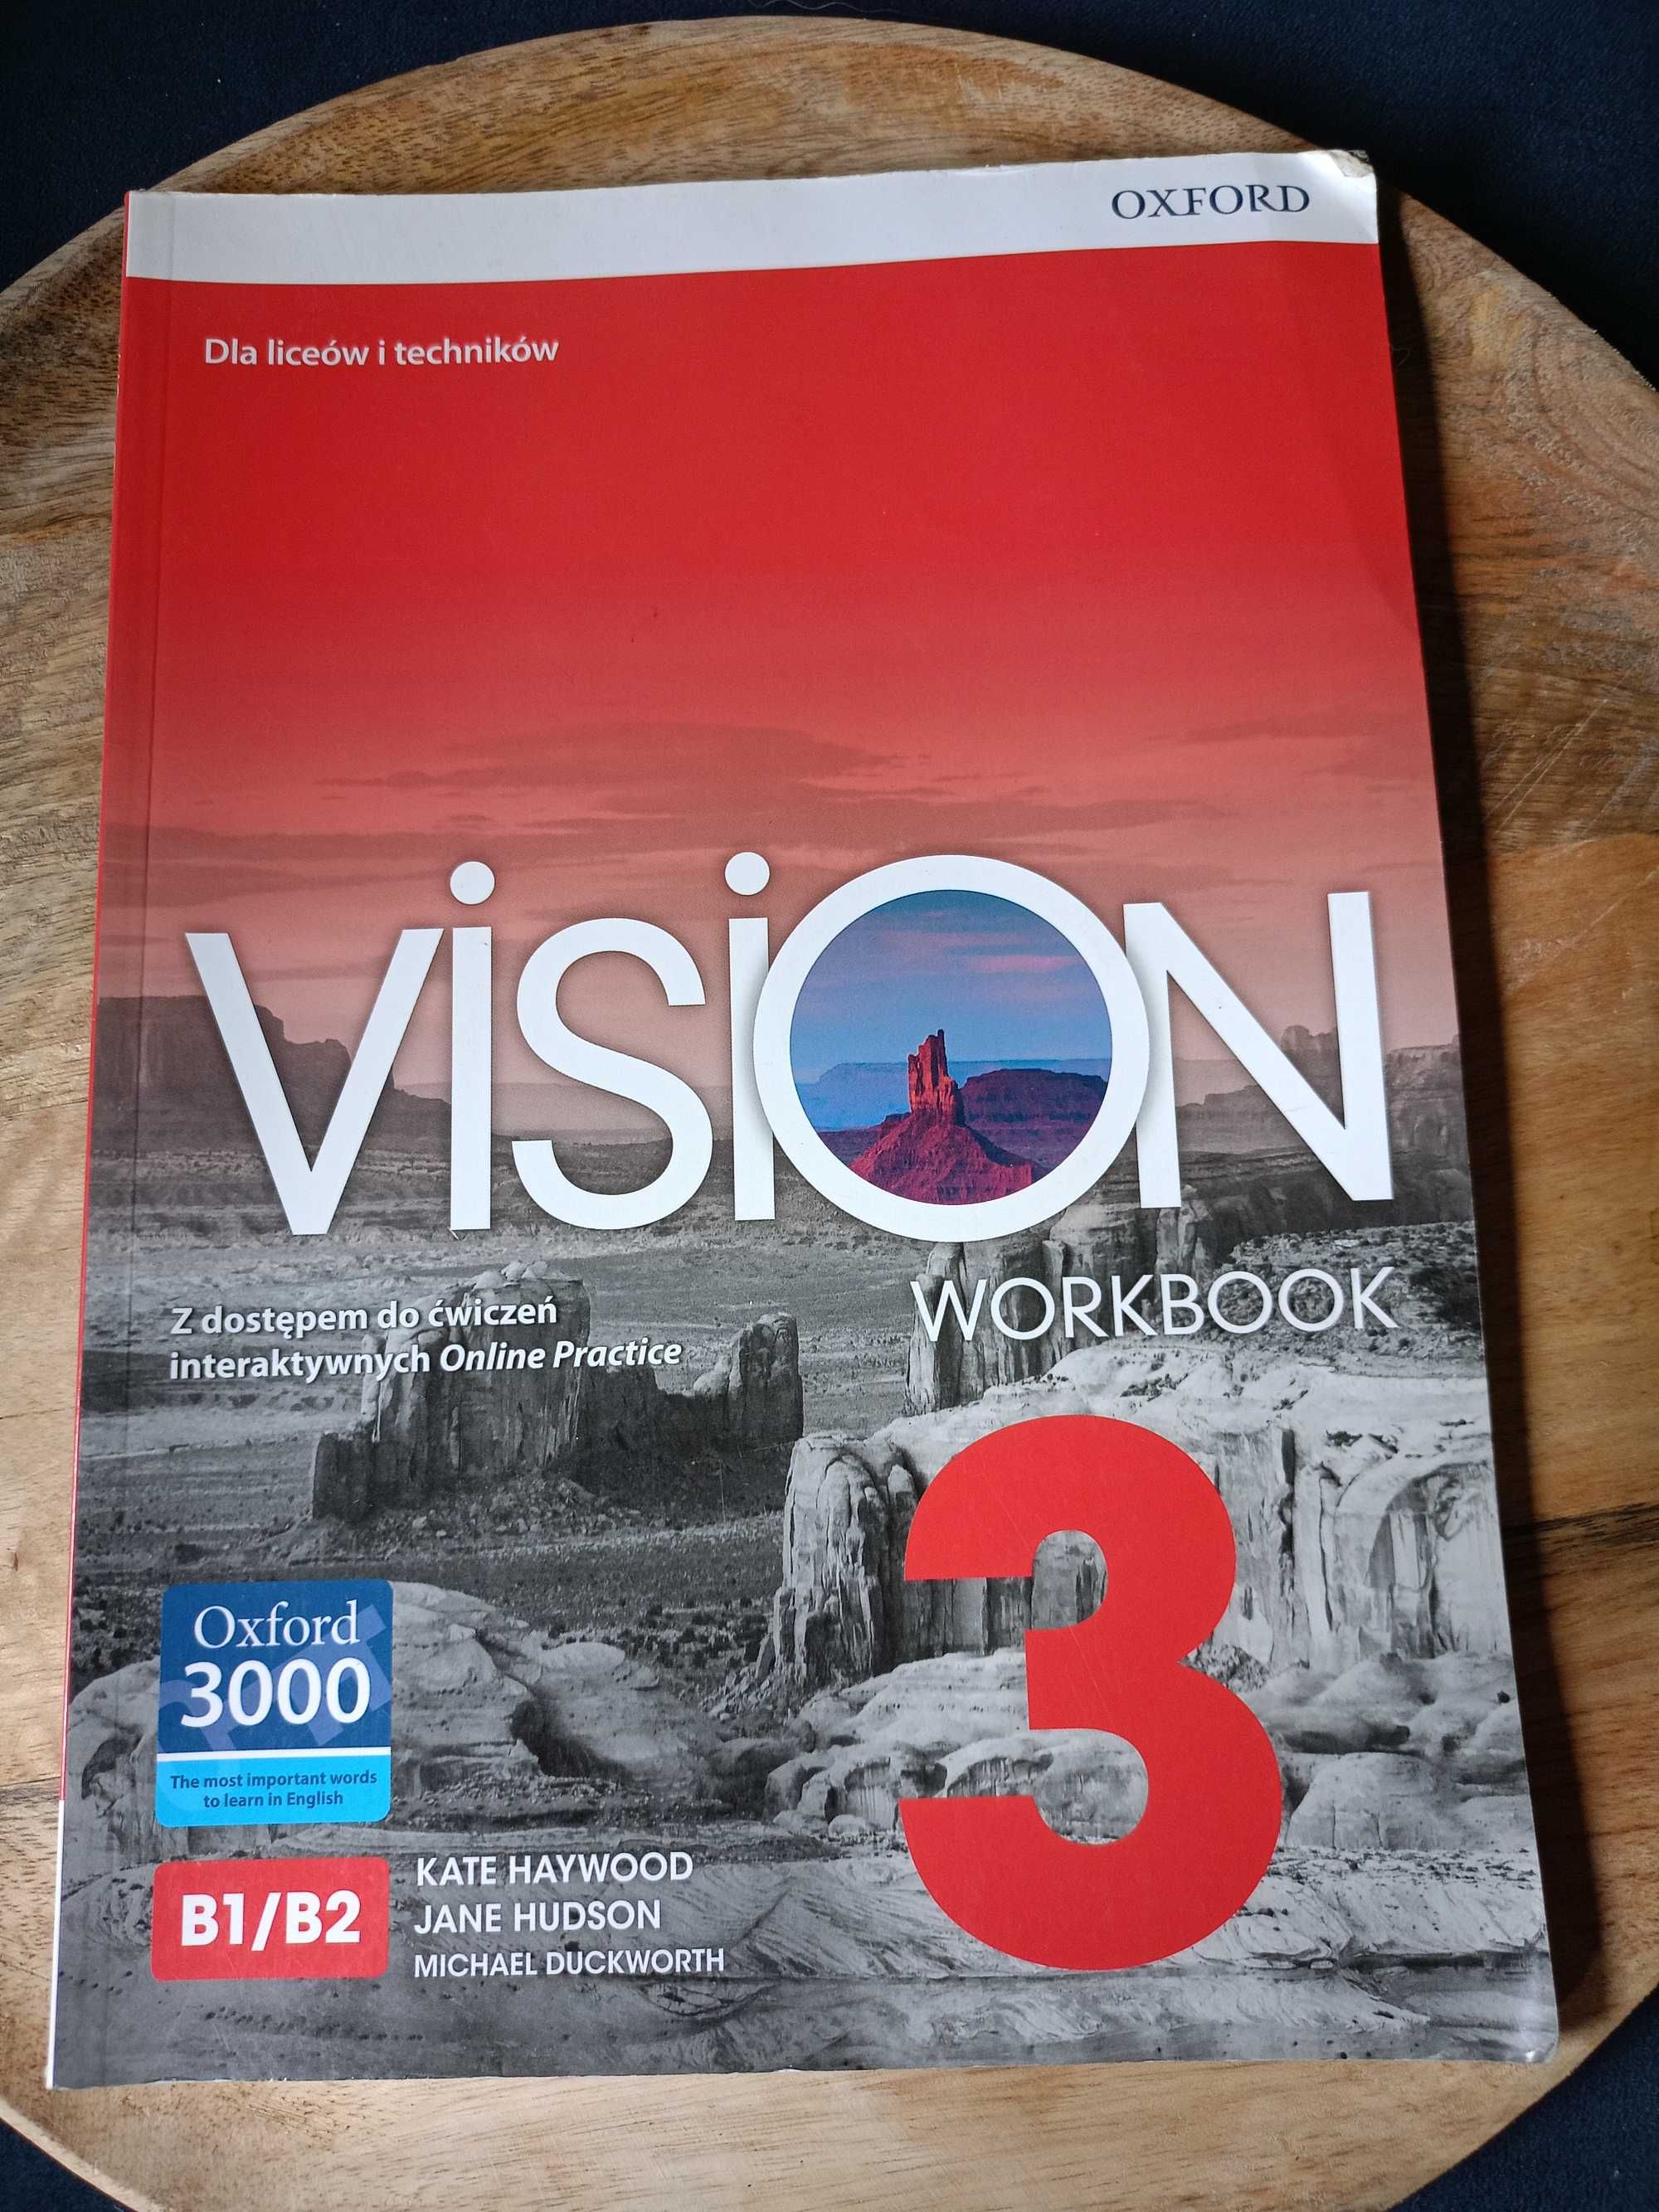 Vision 3 komplet. Wydawnictwo Oxford. Jak nowe!